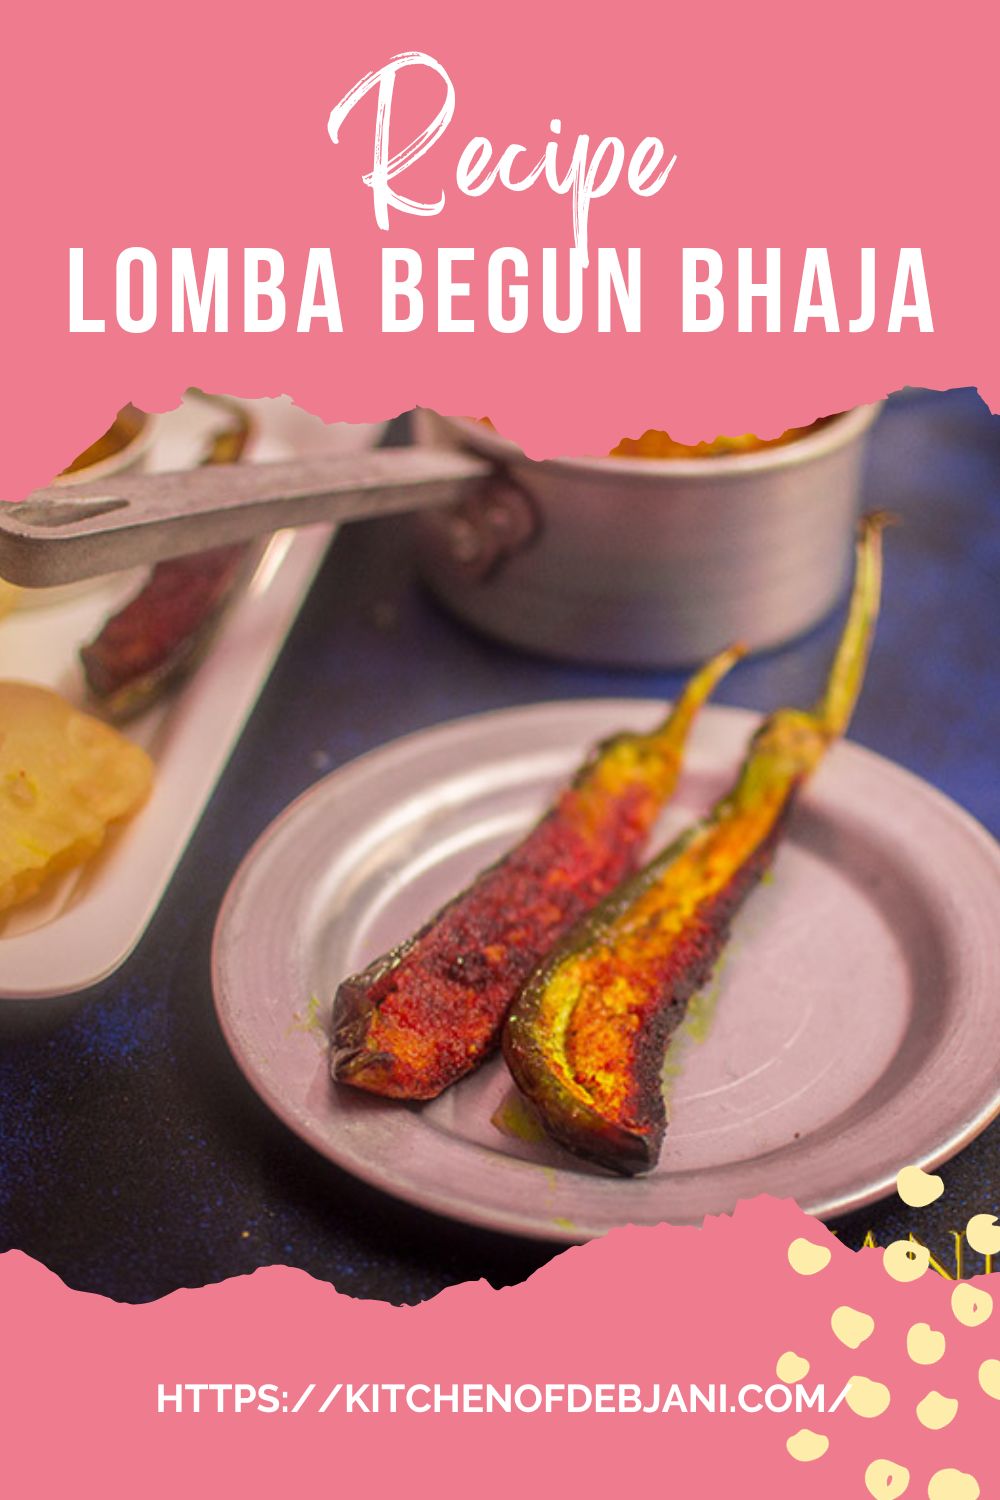 %Bengali Lomba Dantiwala Begun bhaja Photo Food Pinterest Pin